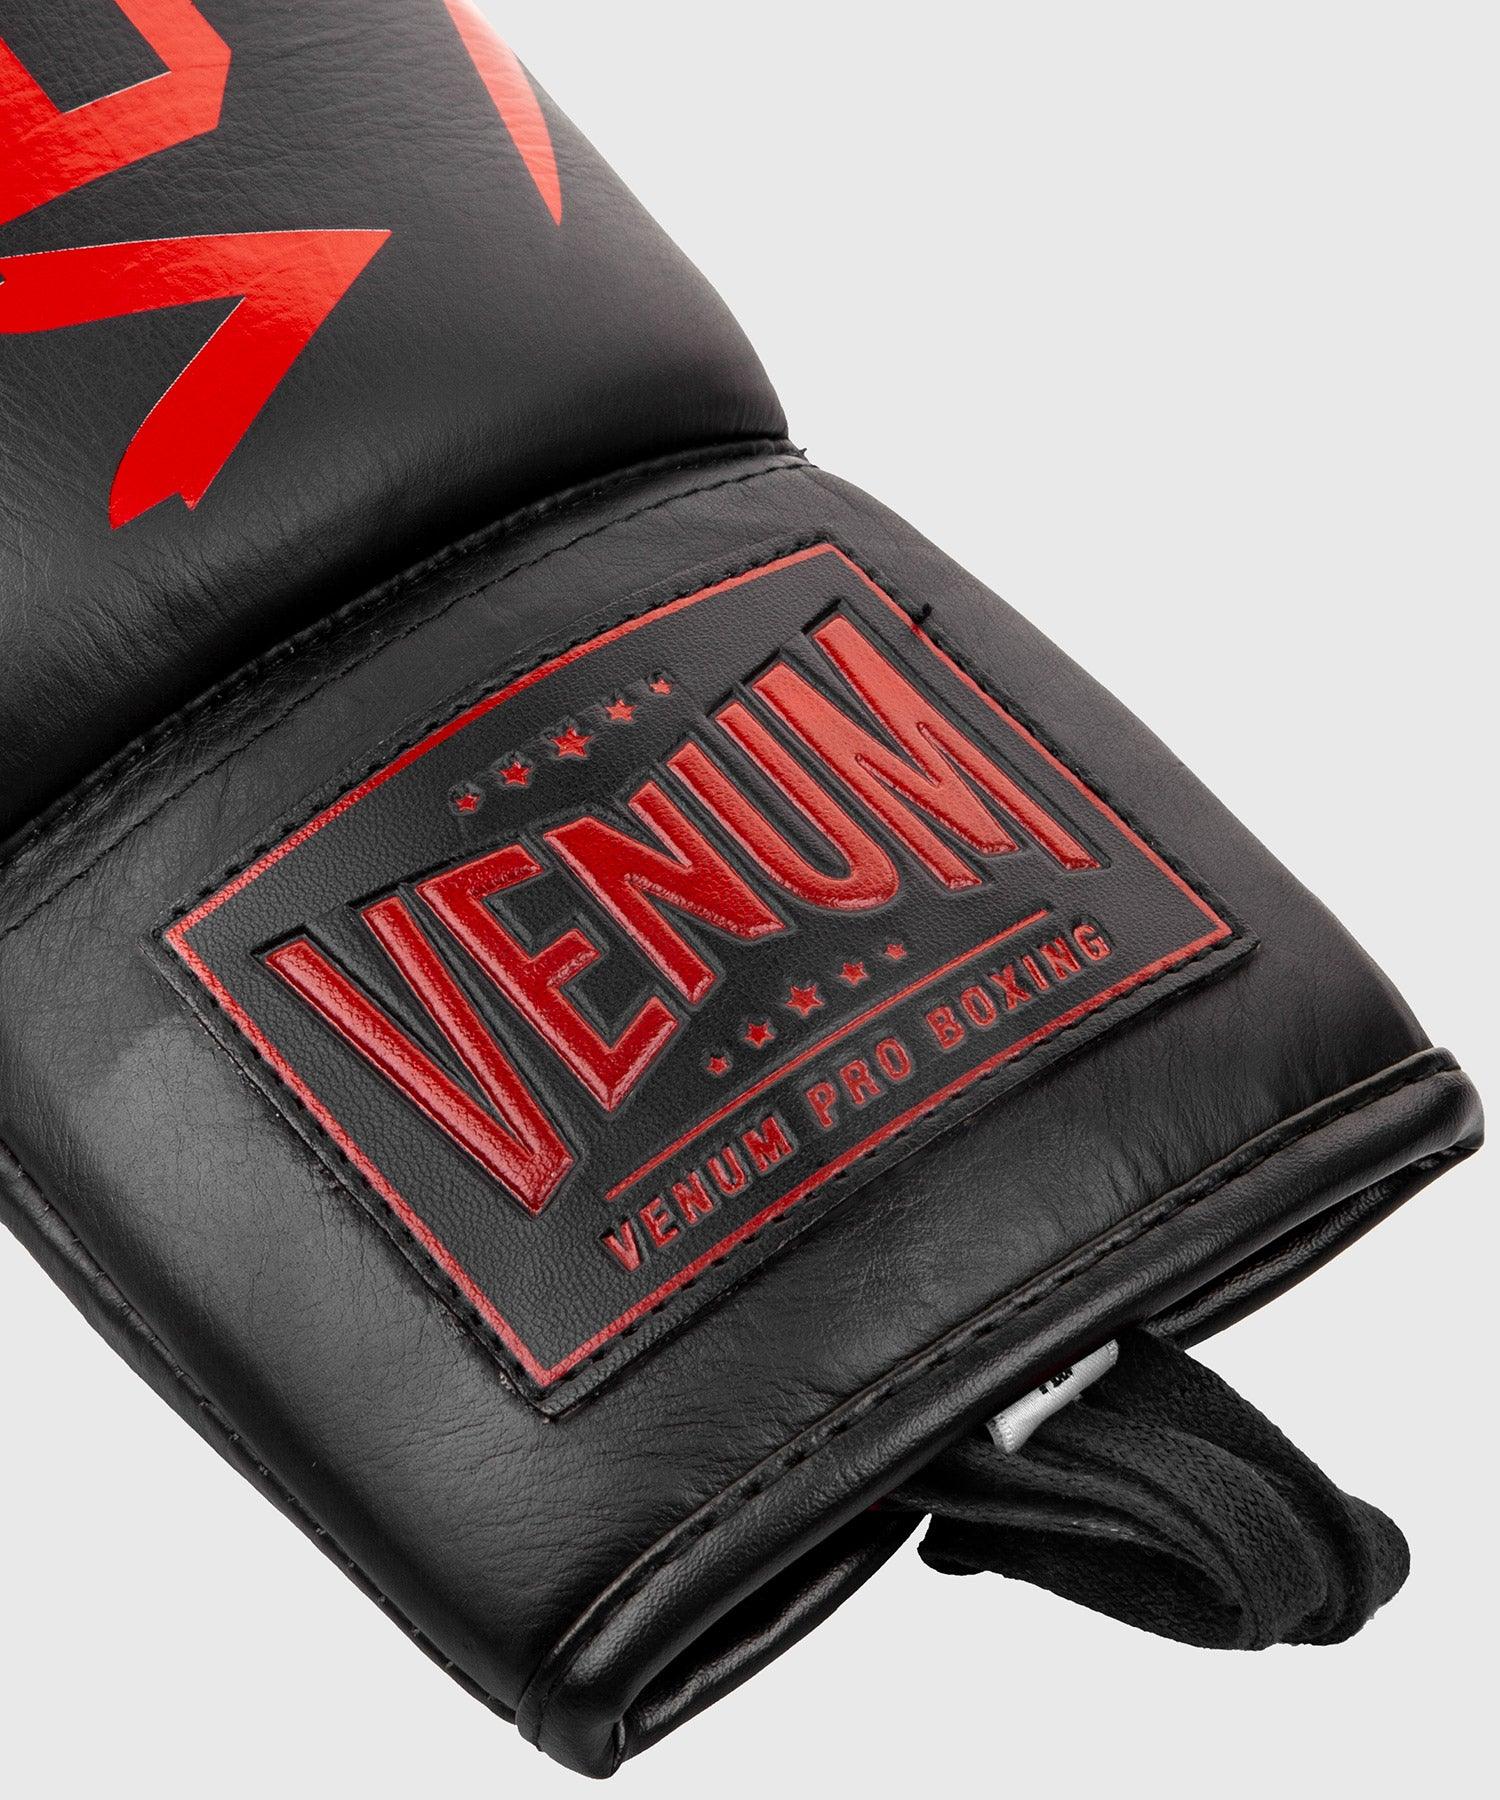 Venum Coco Monogram Pro Lace Up Boxing Gloves - Garnet Red